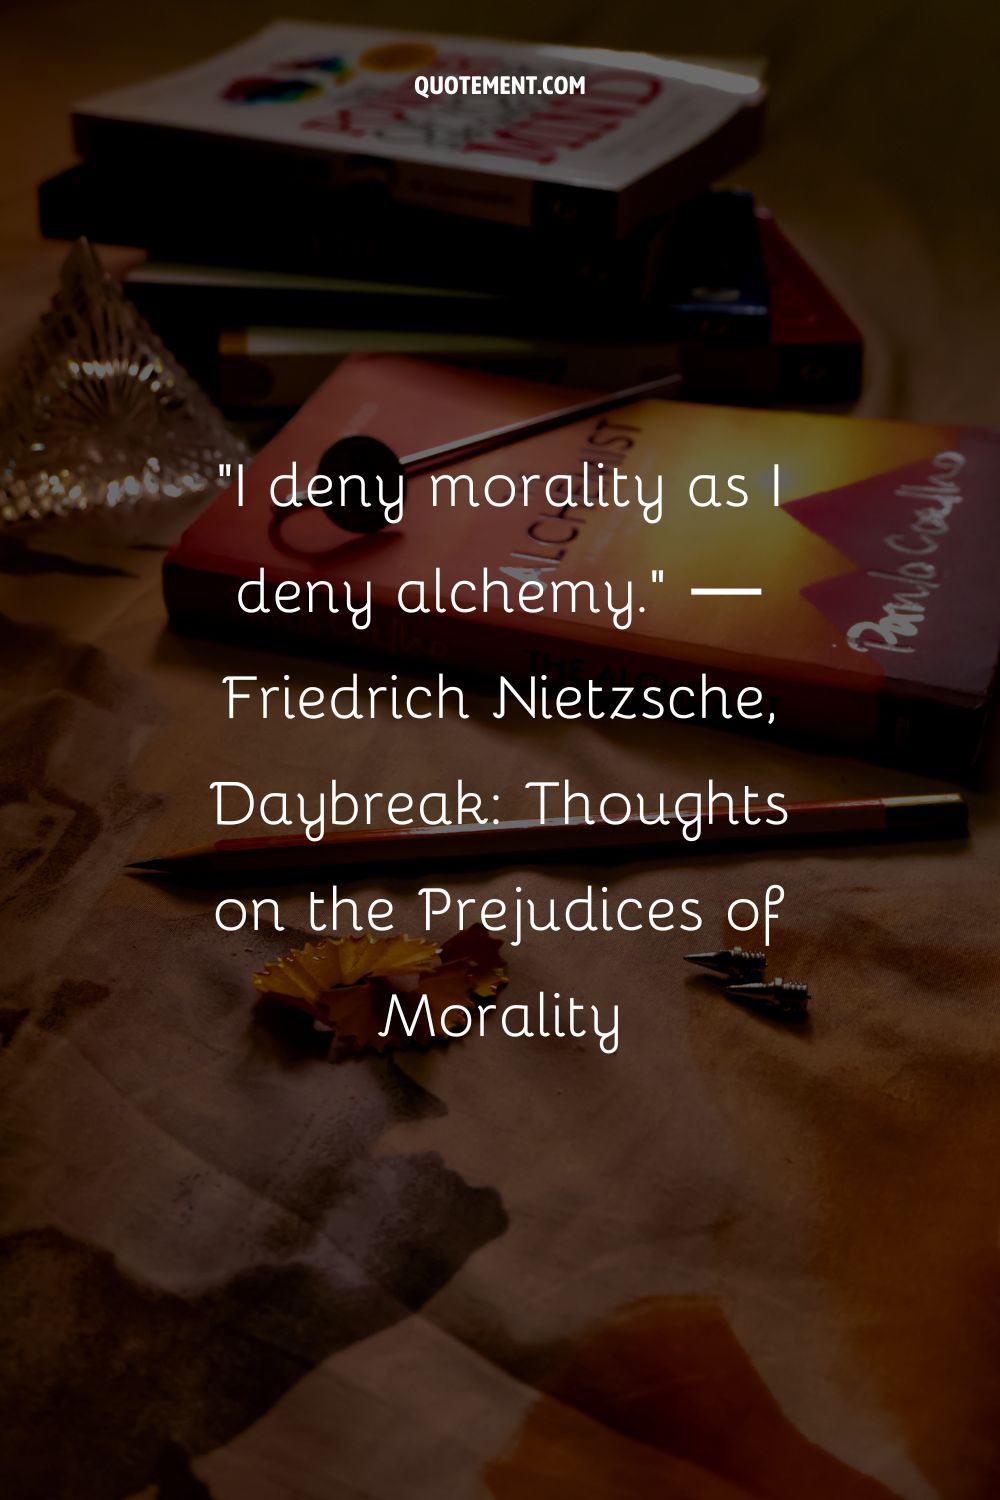 I deny morality as I deny alchemy